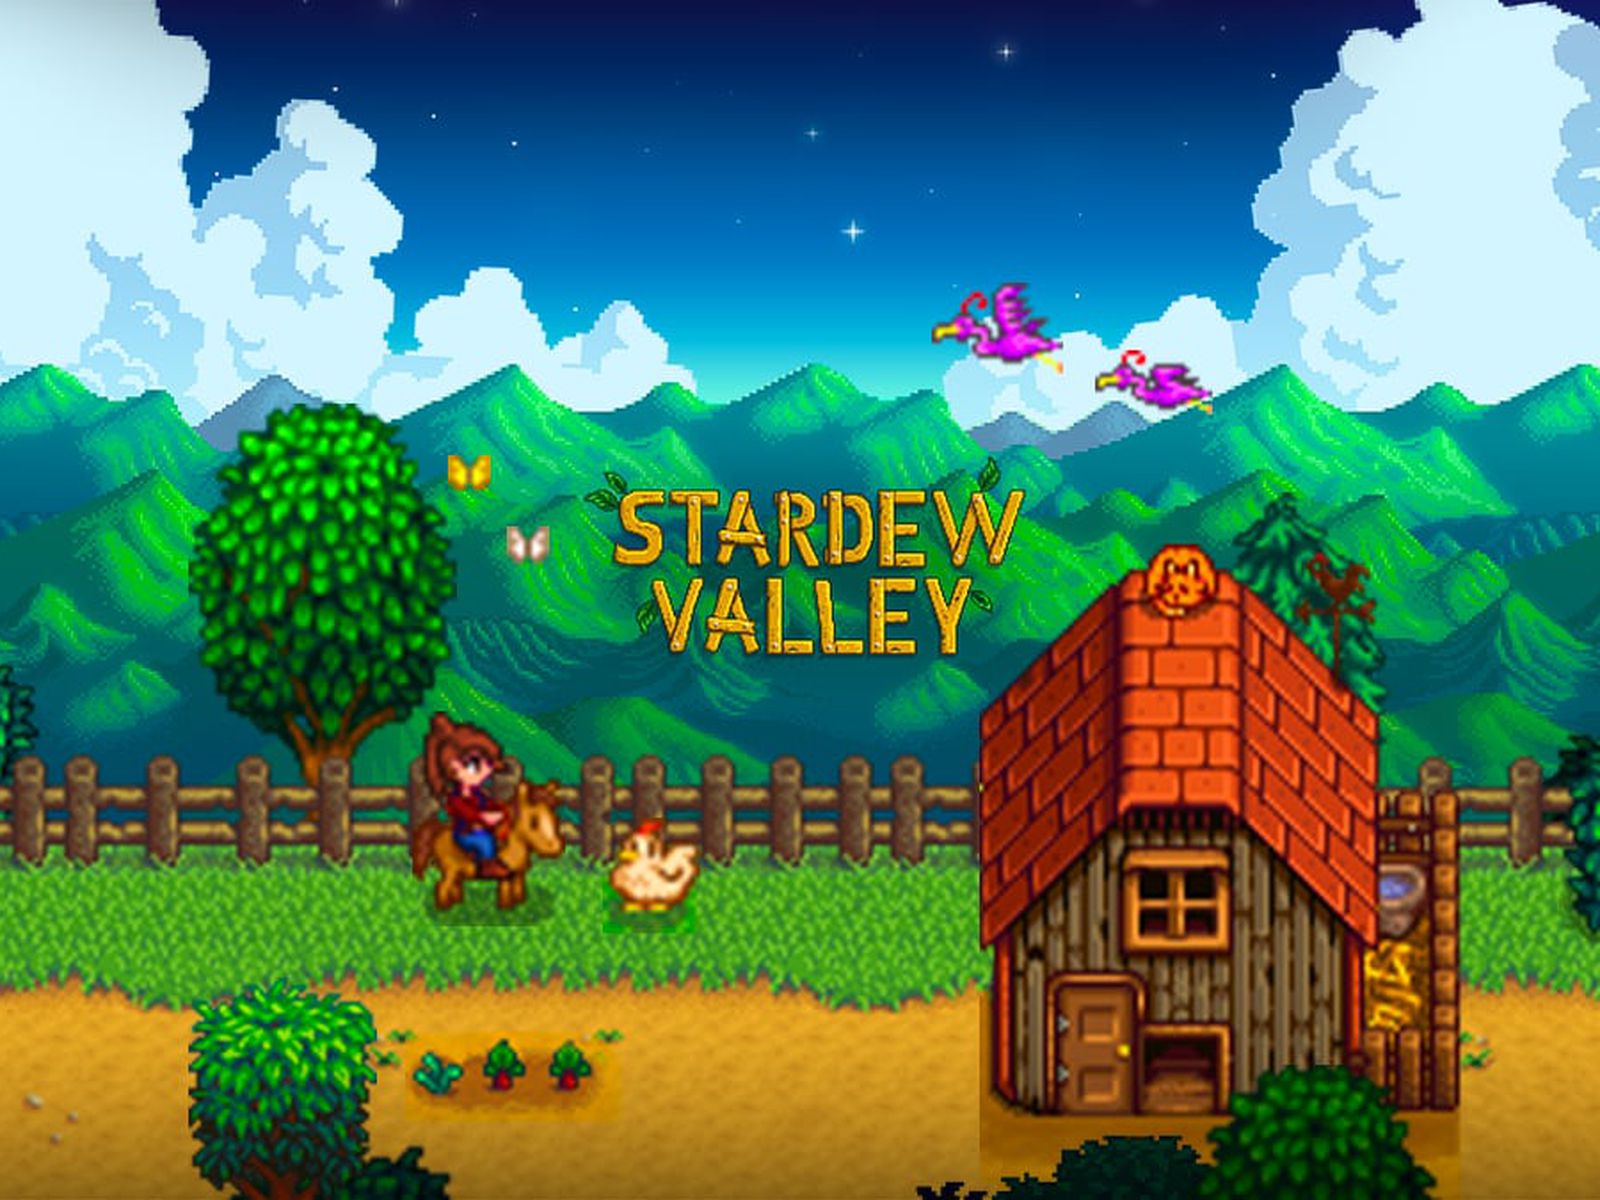 Stardew Valley+ Videos for iOS (iPhone/iPad) - GameFAQs